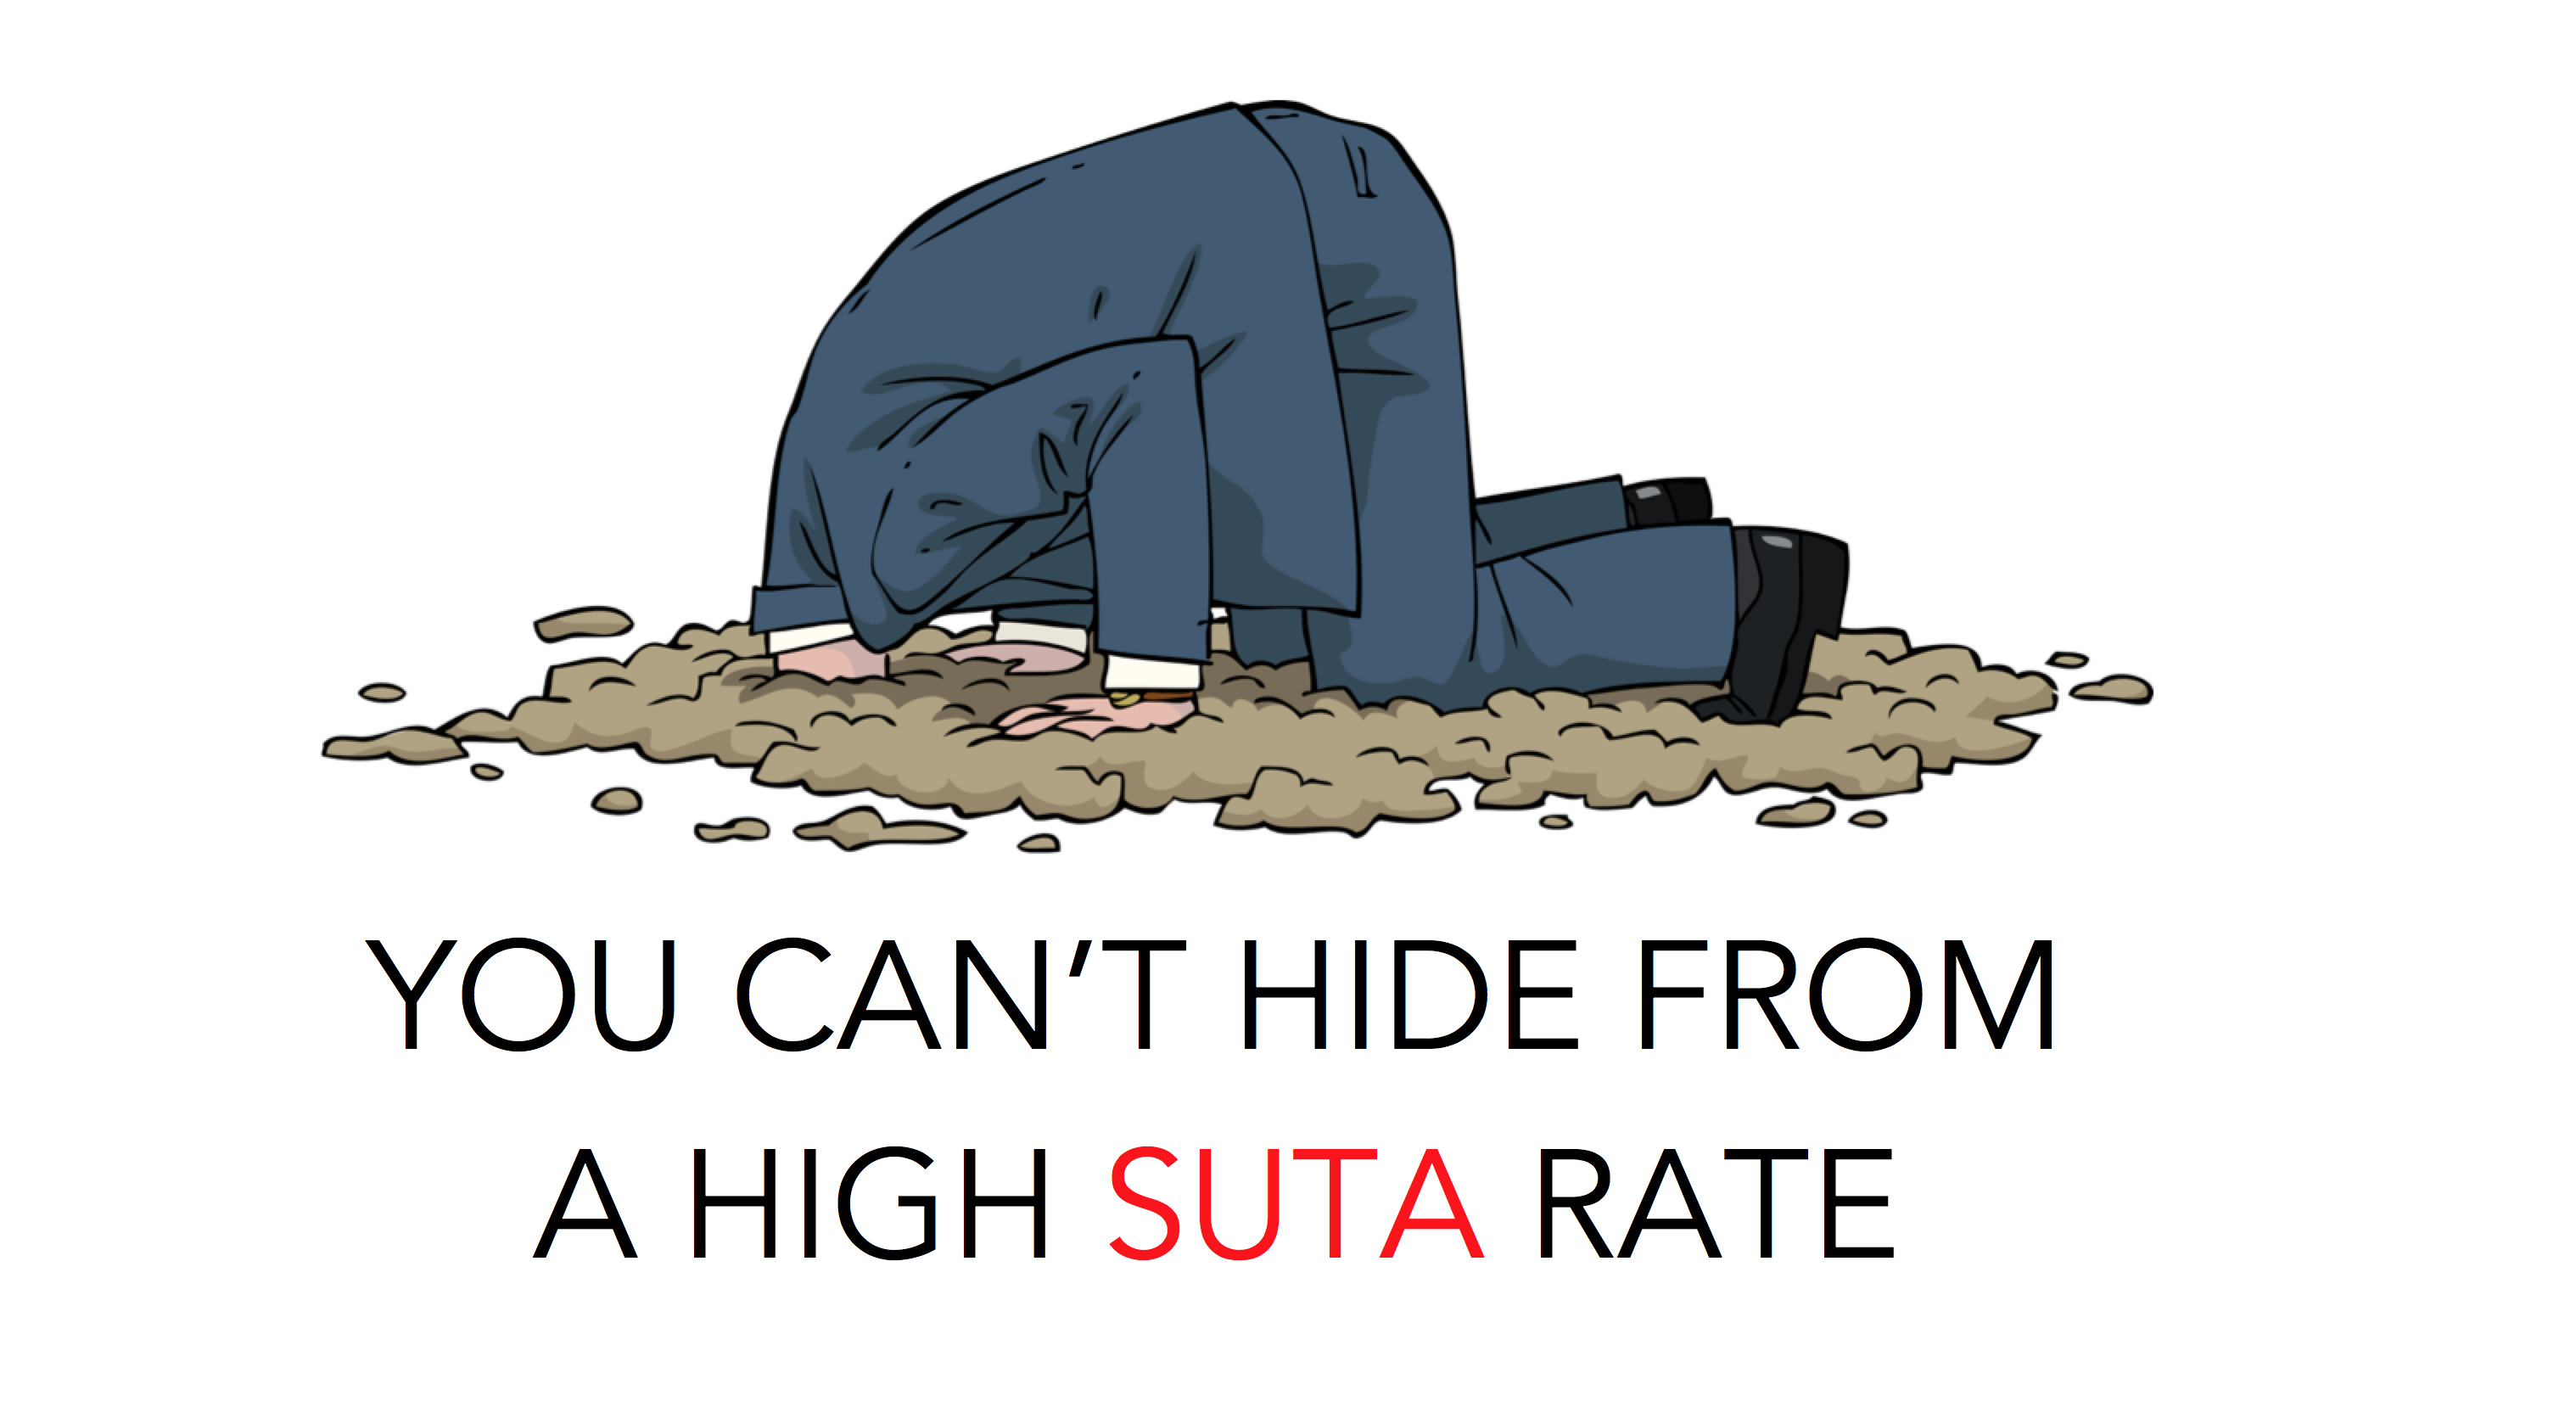 HIGH-SUTA-RATE